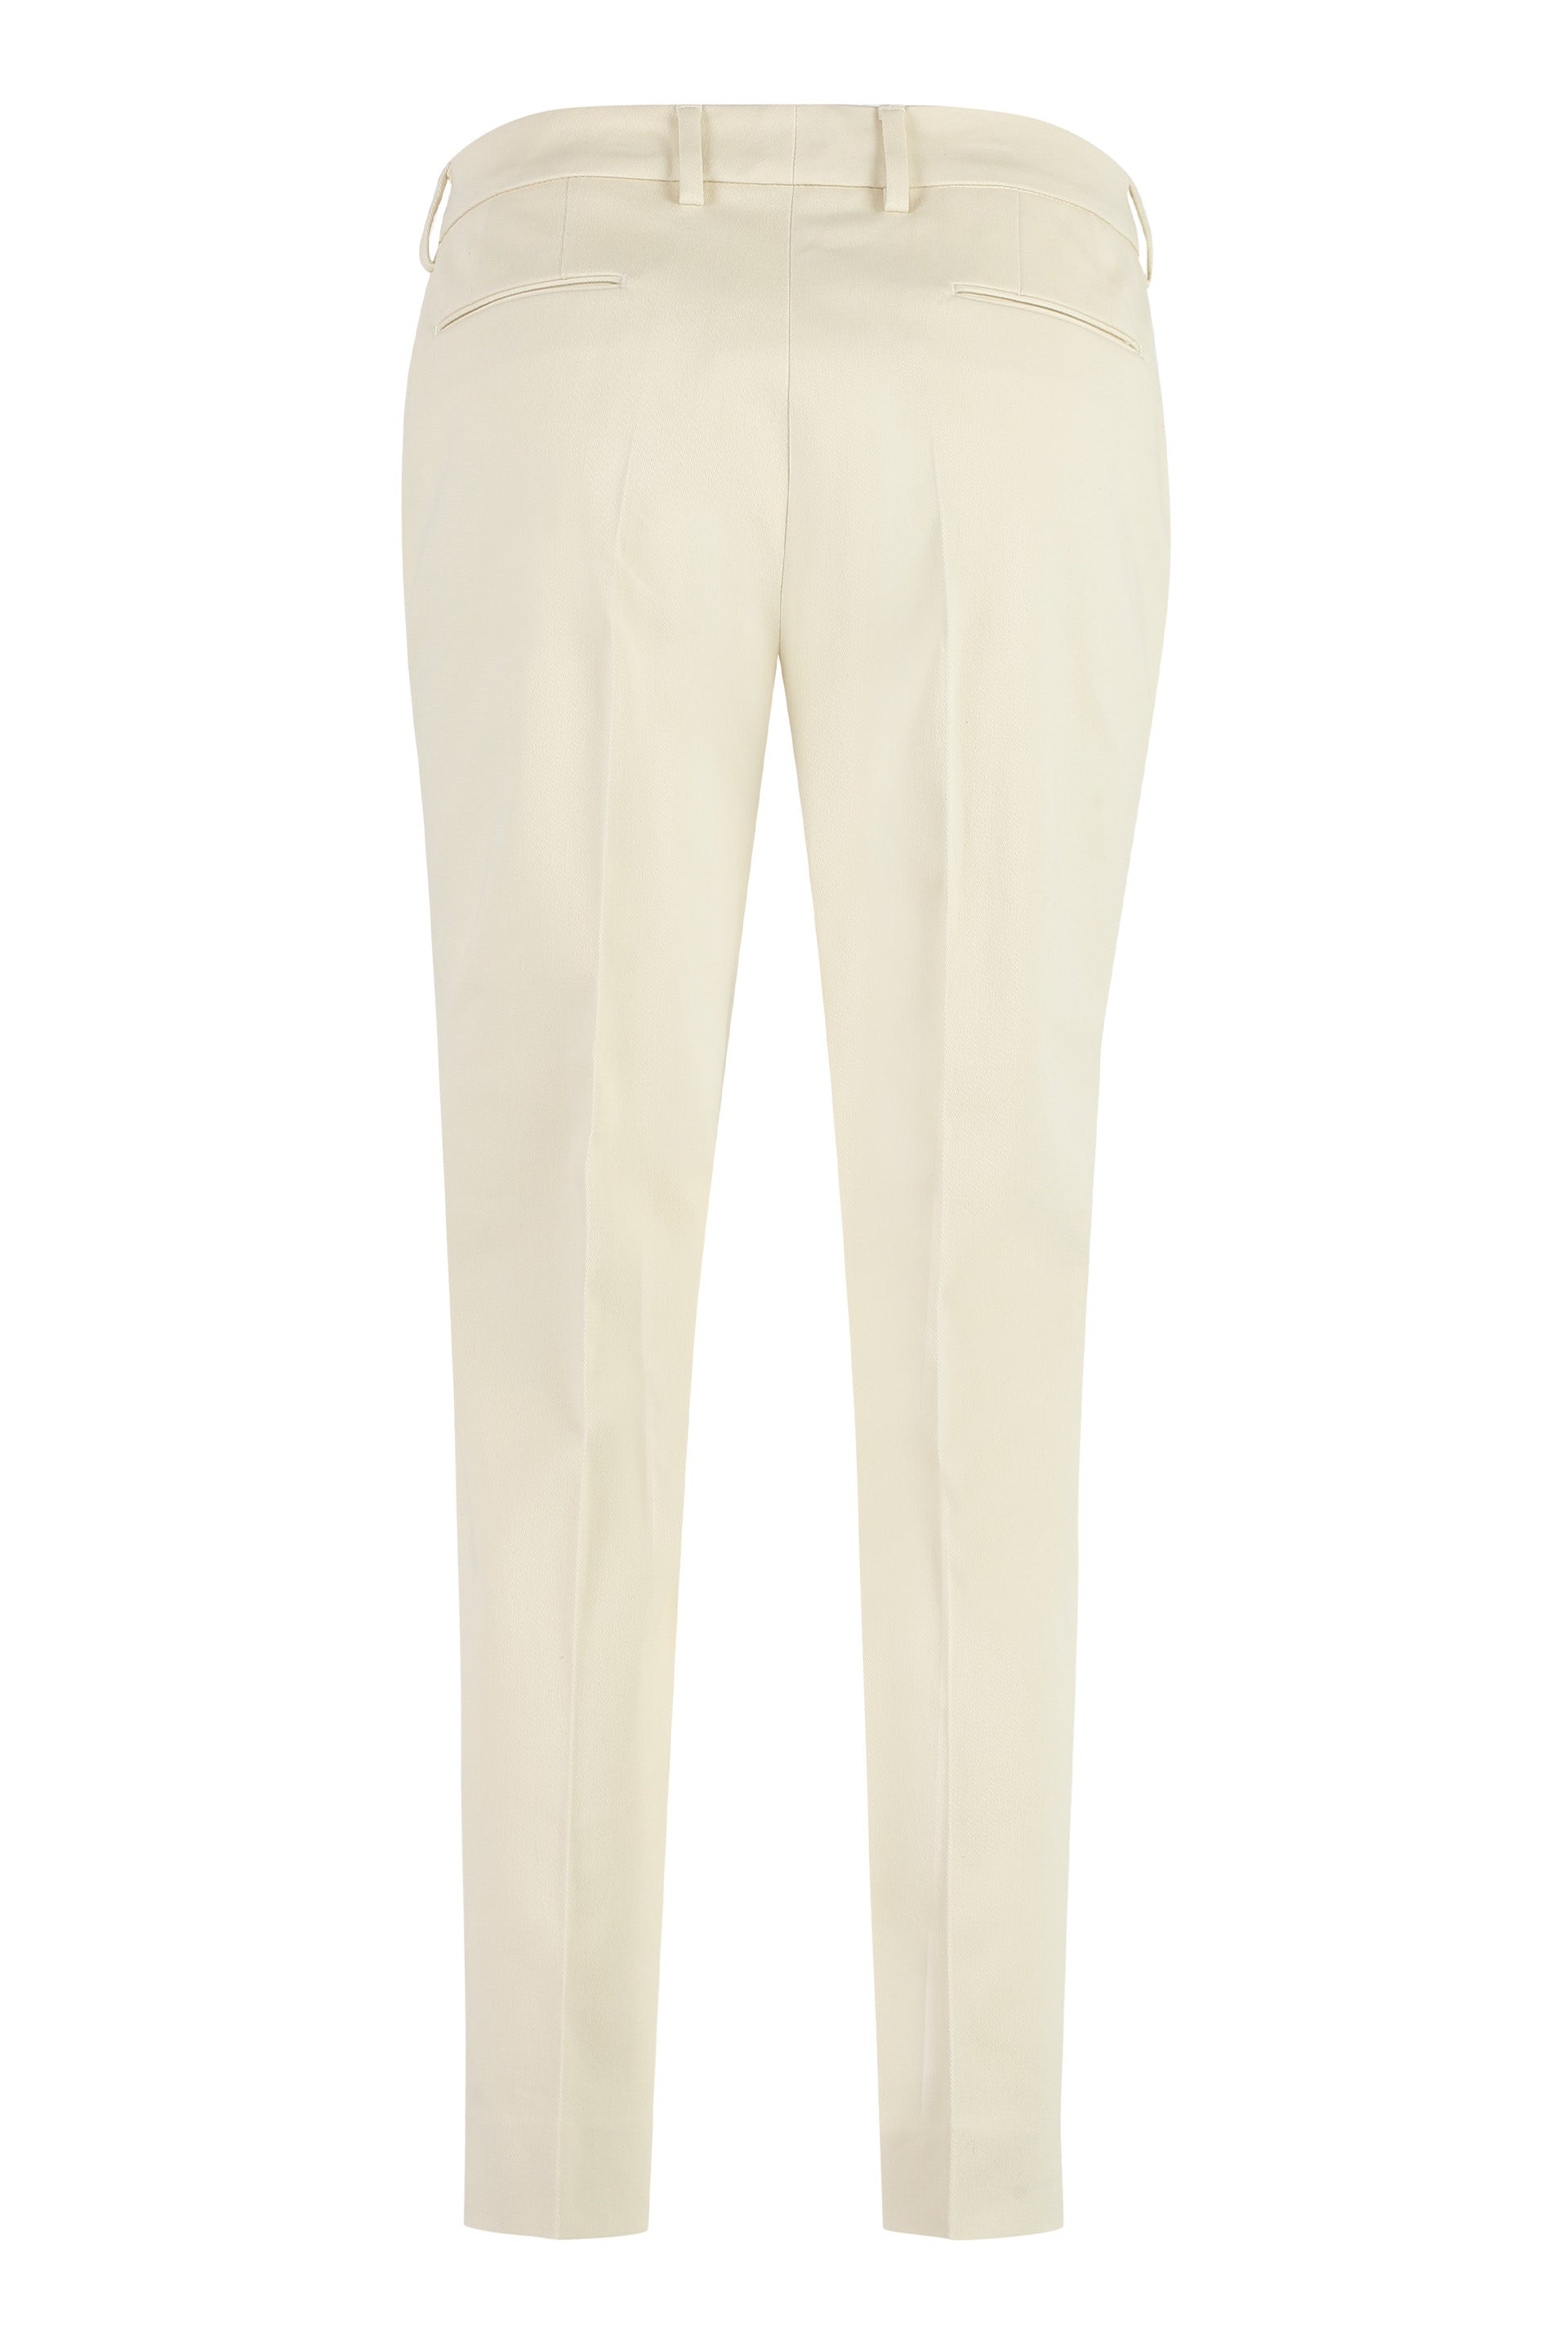 Ankle-length Pants - Cream - Ladies | H&M US